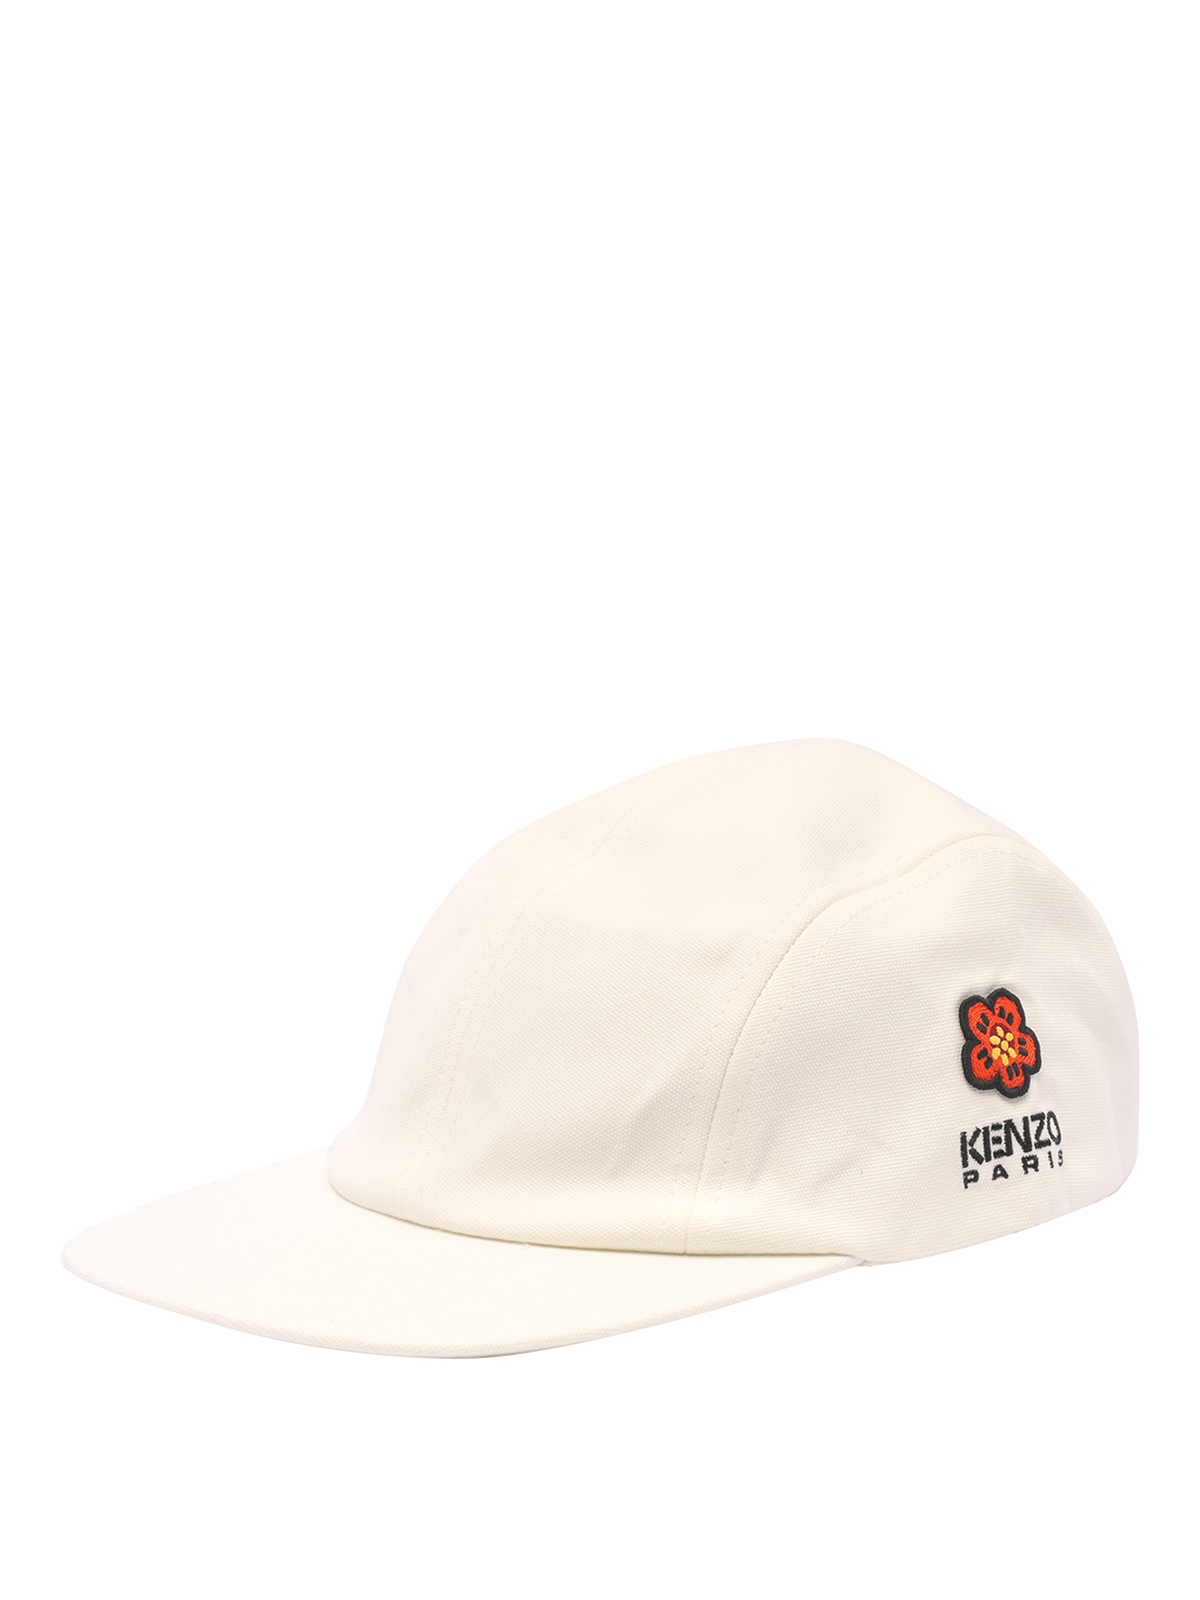 Hats and caps Kenzo - Boke flower baseball cap